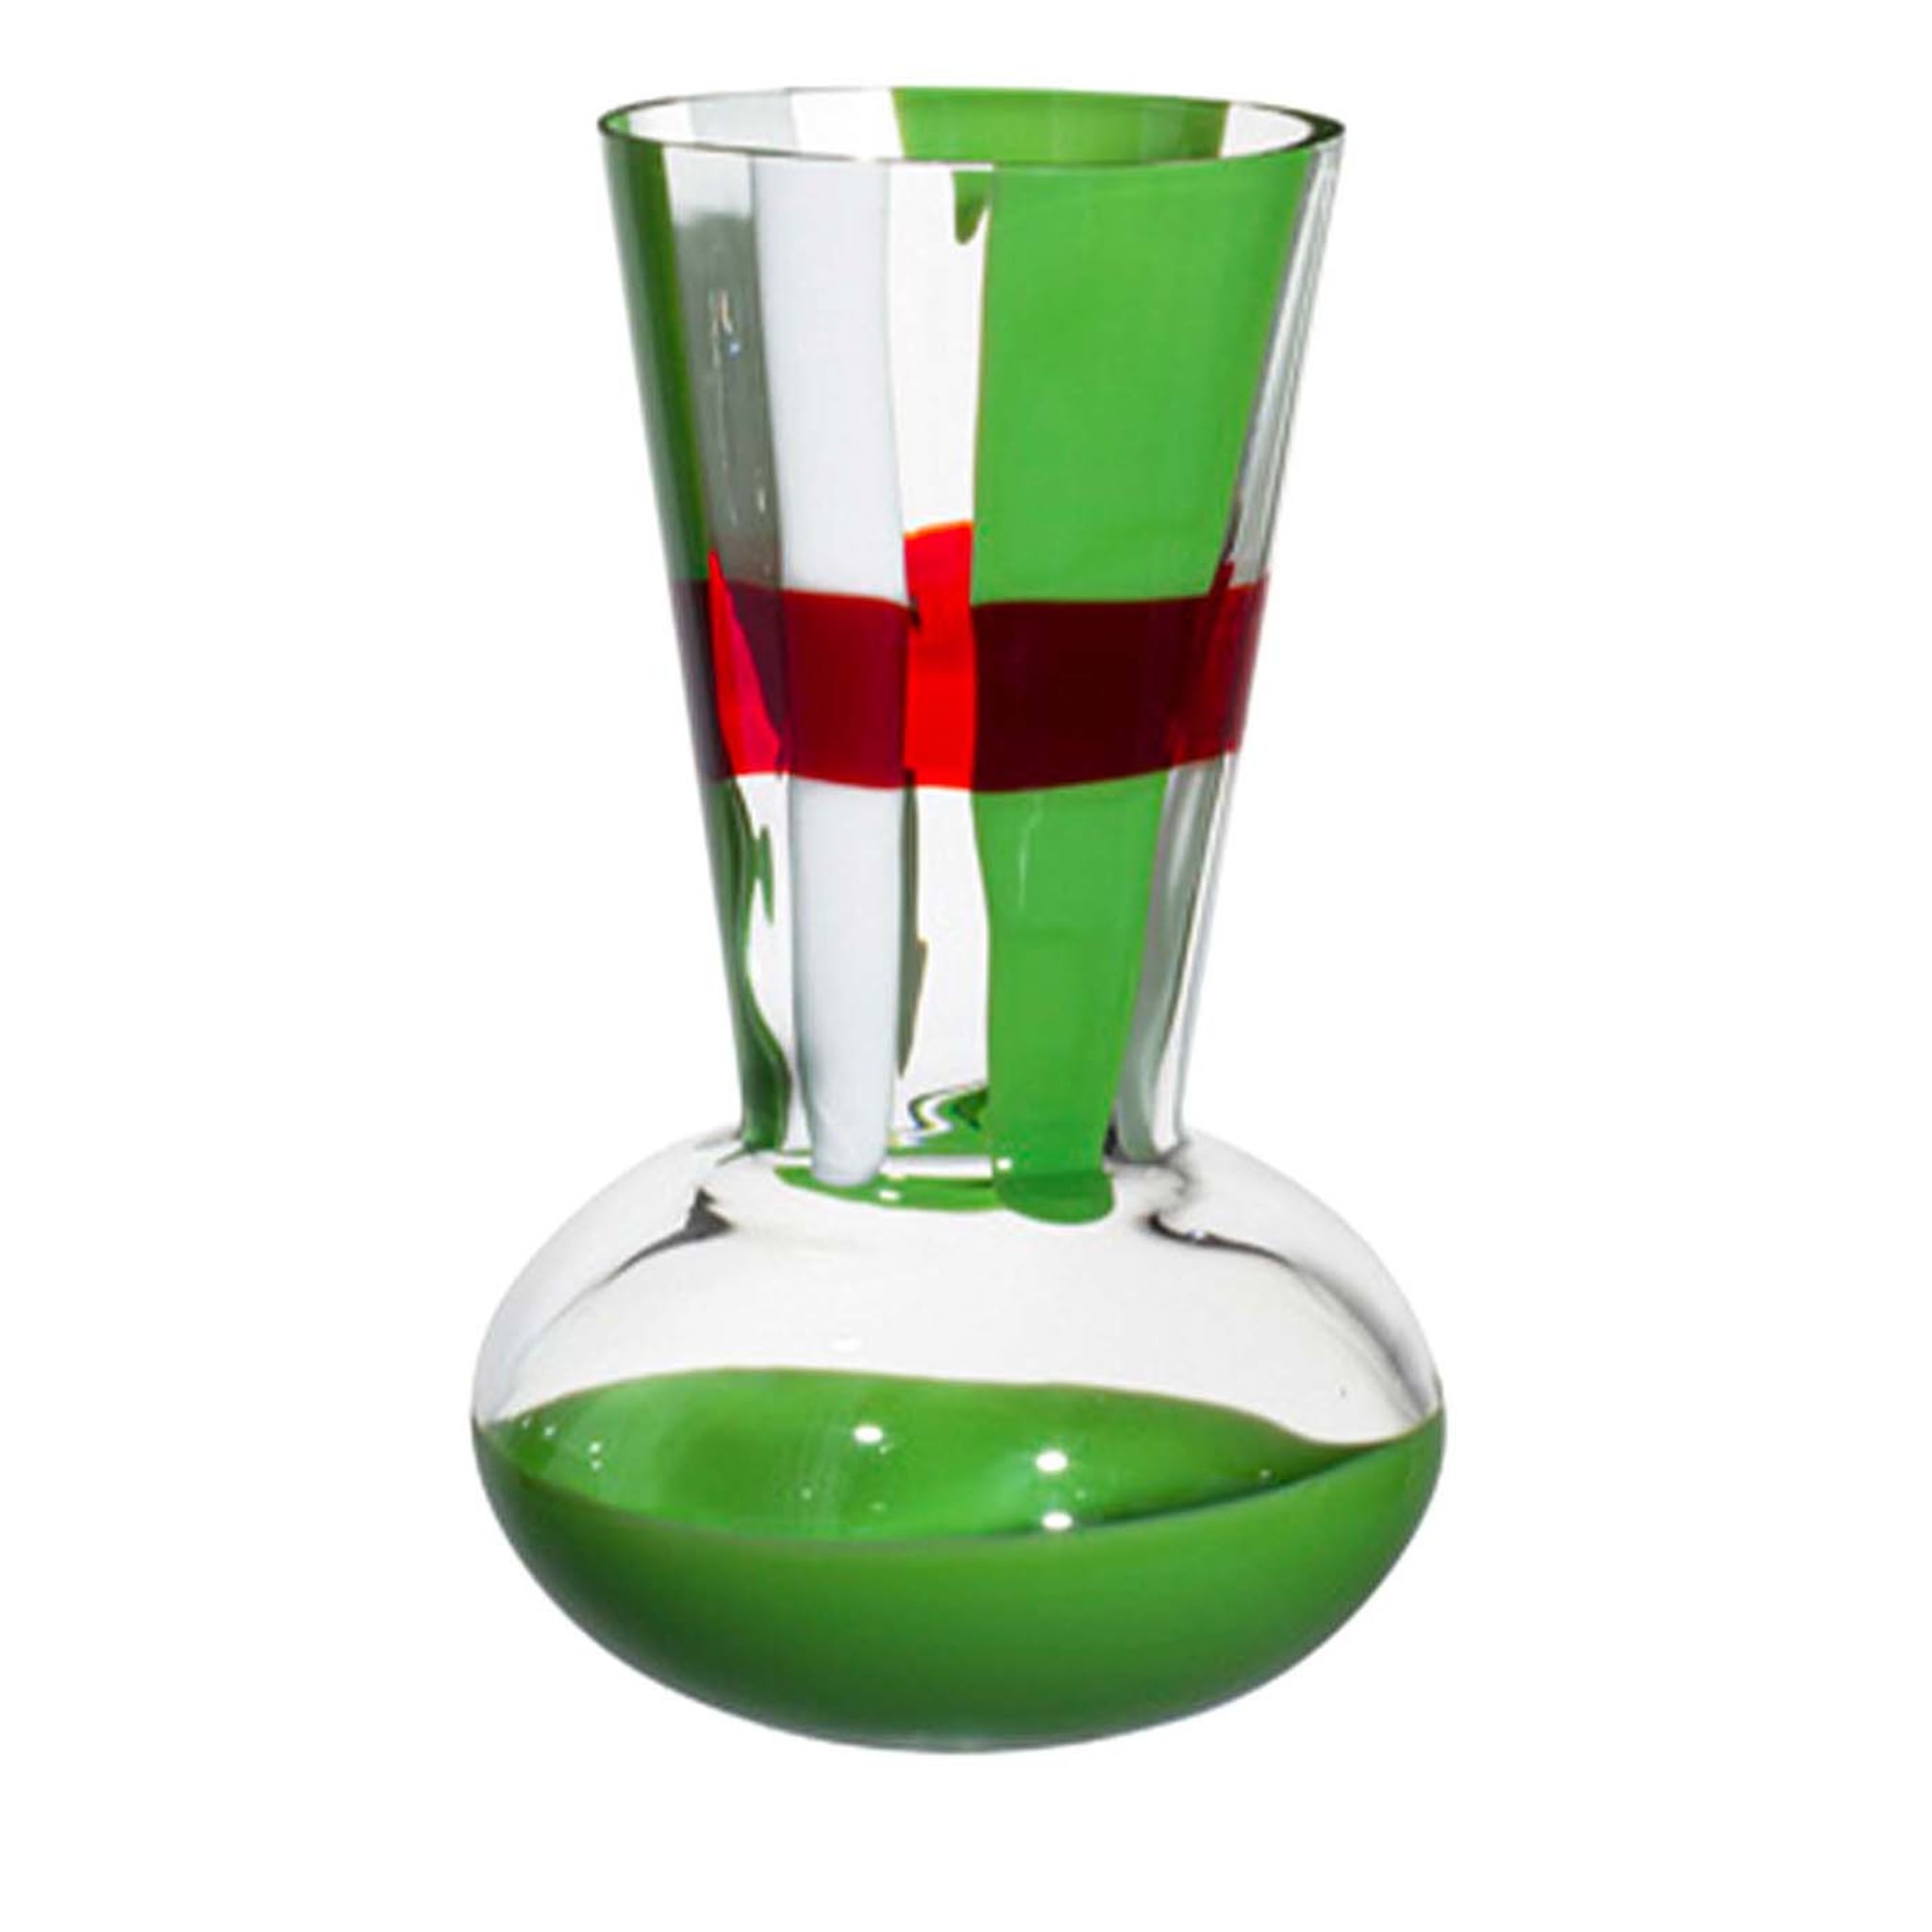 Troncosfera Green/White/Red Stripes Vase by Carlo Moretti - Main view